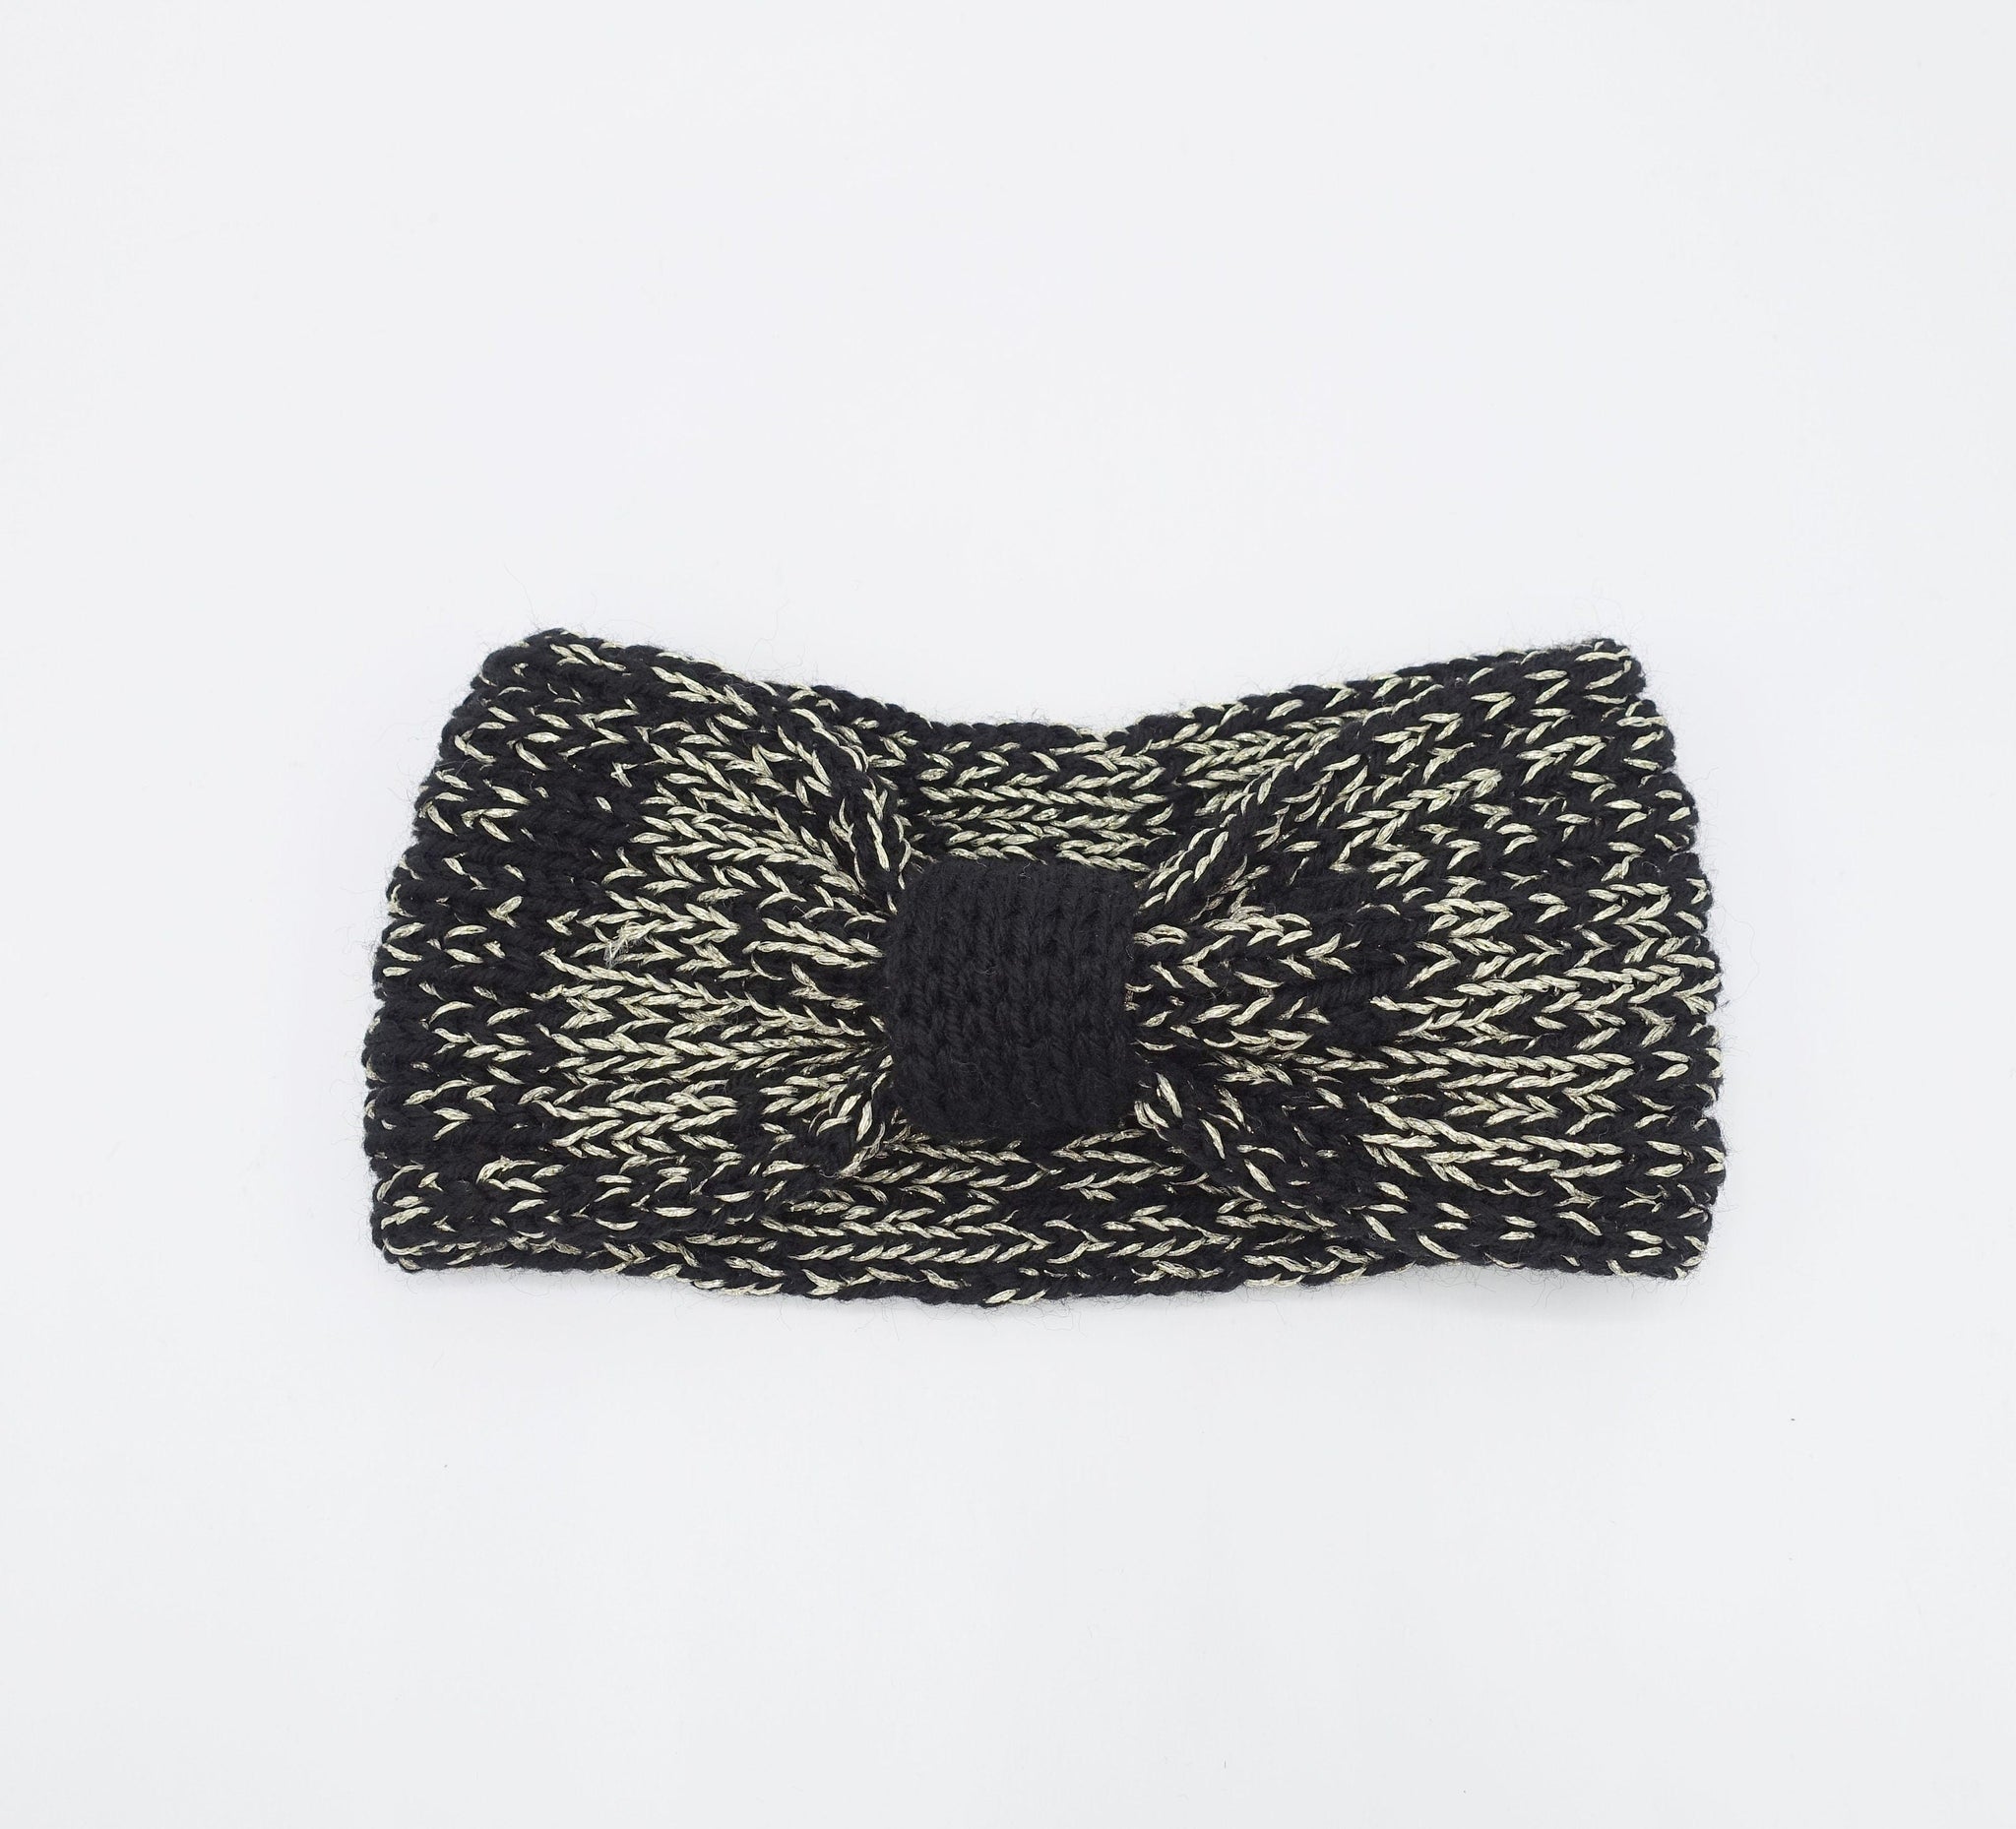 veryshine.com Headband golden glittering knit knot headband for women